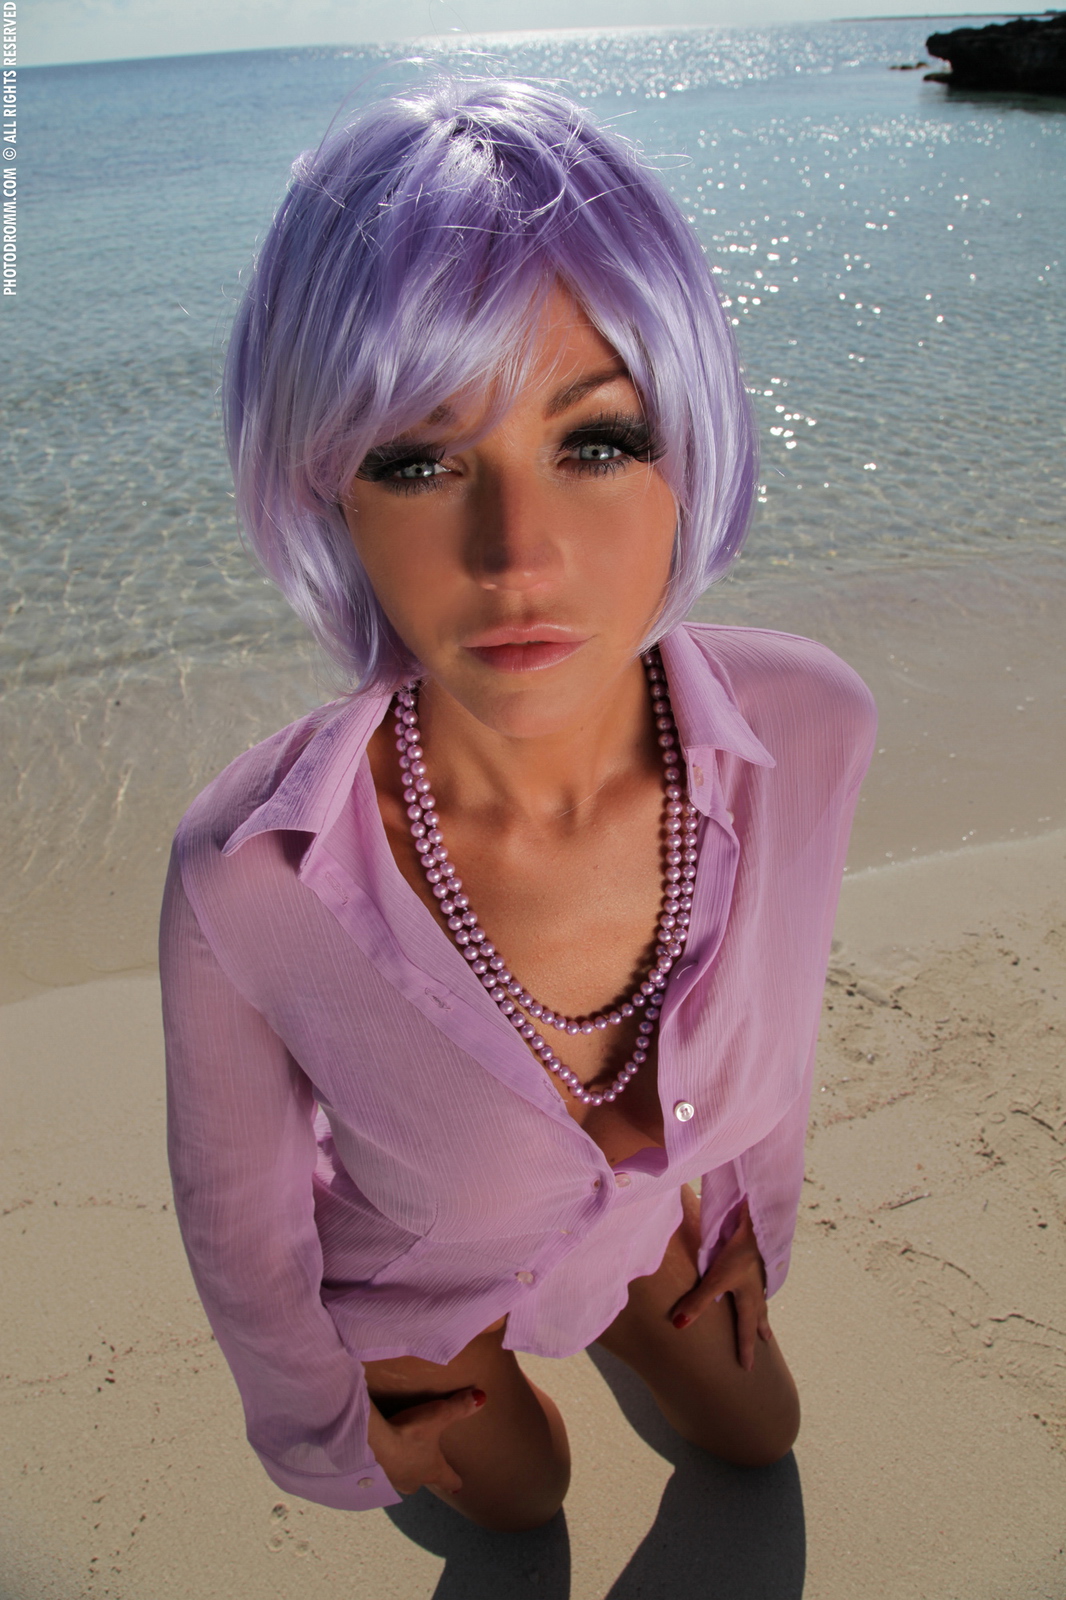 holly-henderson-boobs-seaside-nude-purple-wig-photodromm-02